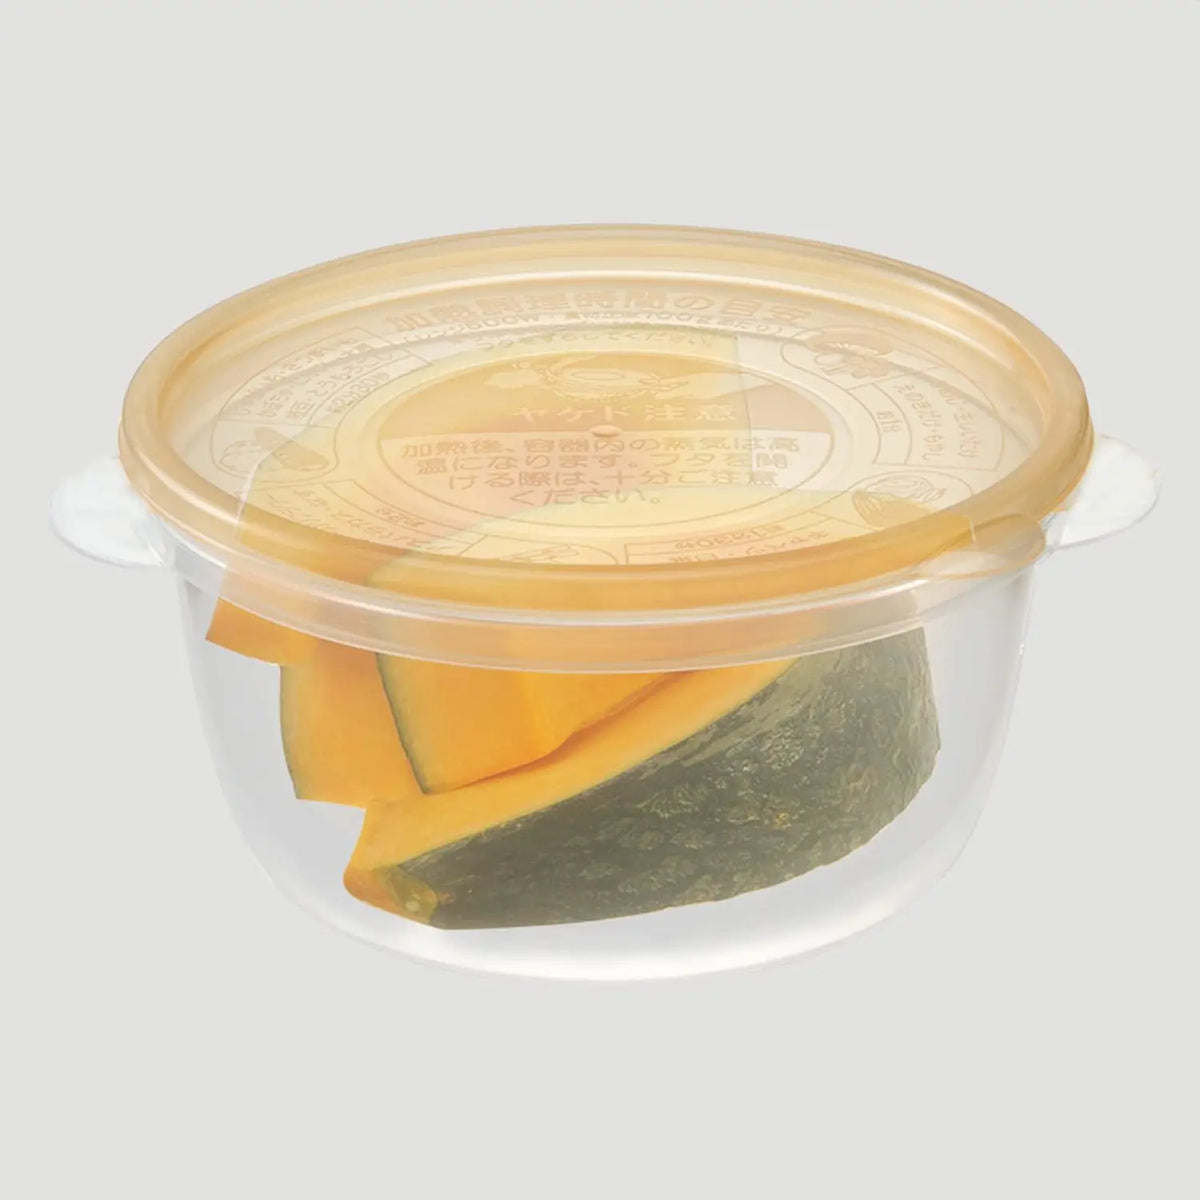 EBiSU Polypropylene Round Microwave Steamer for Vegetables